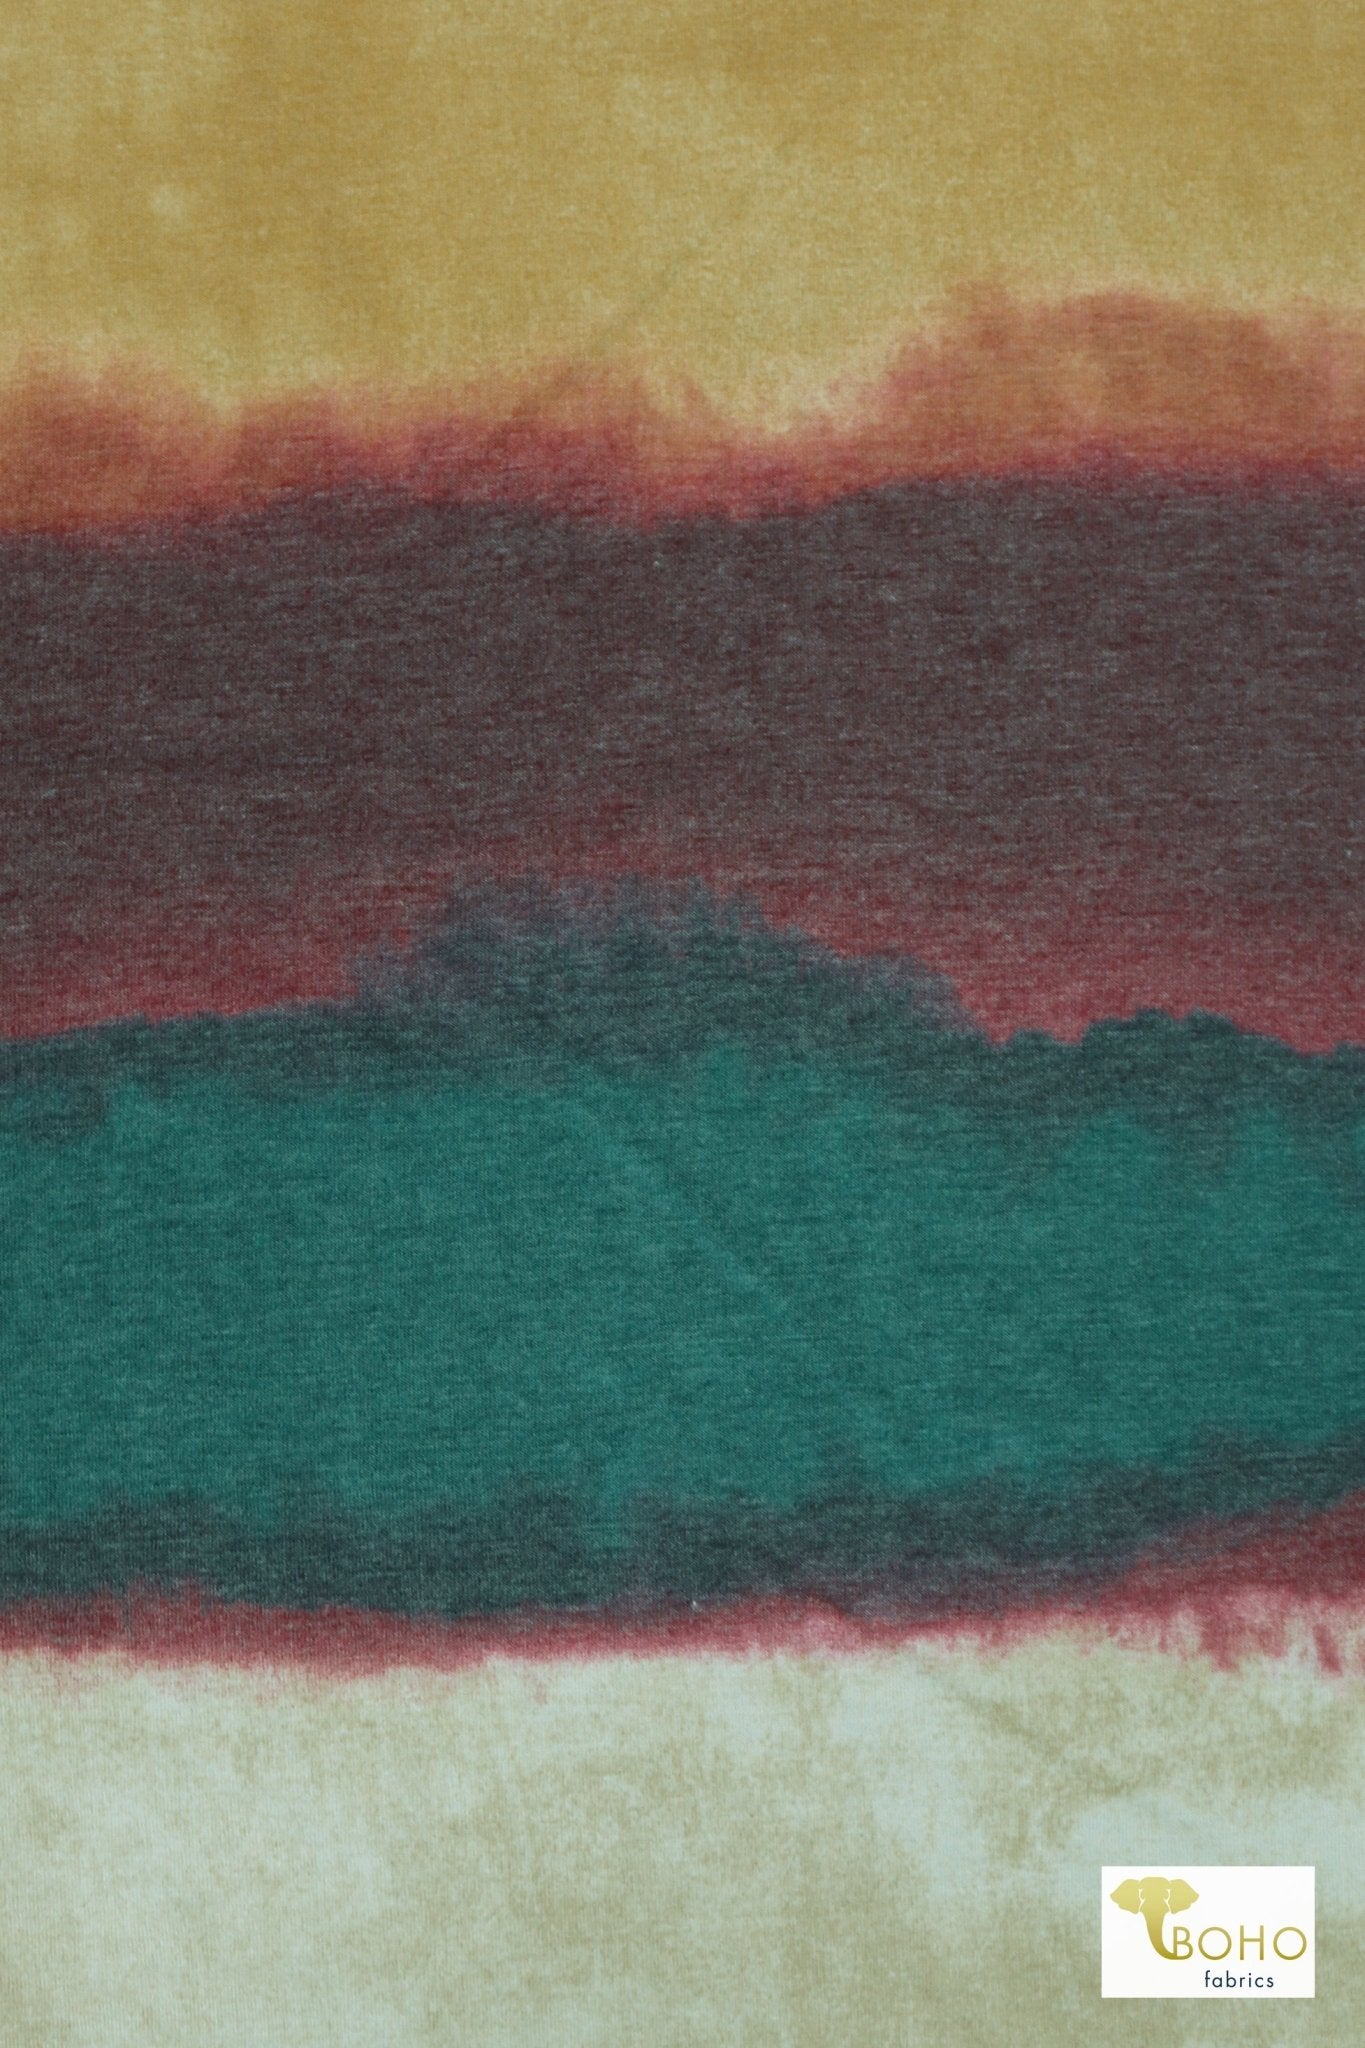 Ombre Desert Jersey Knit - Boho Fabrics